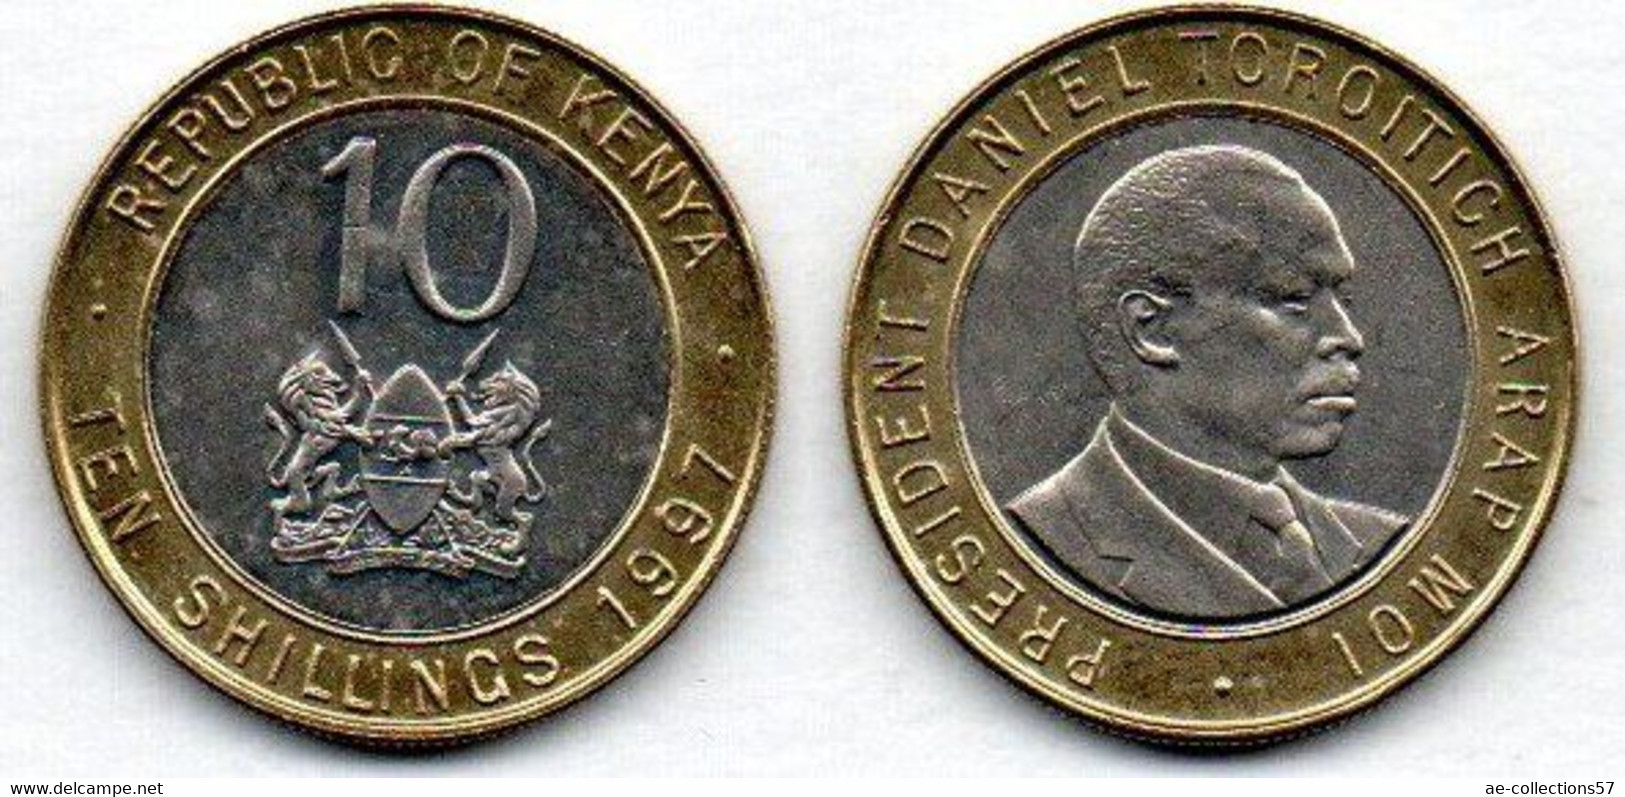 Kenya 10 Shillings 1997 SUP+ - Kenya